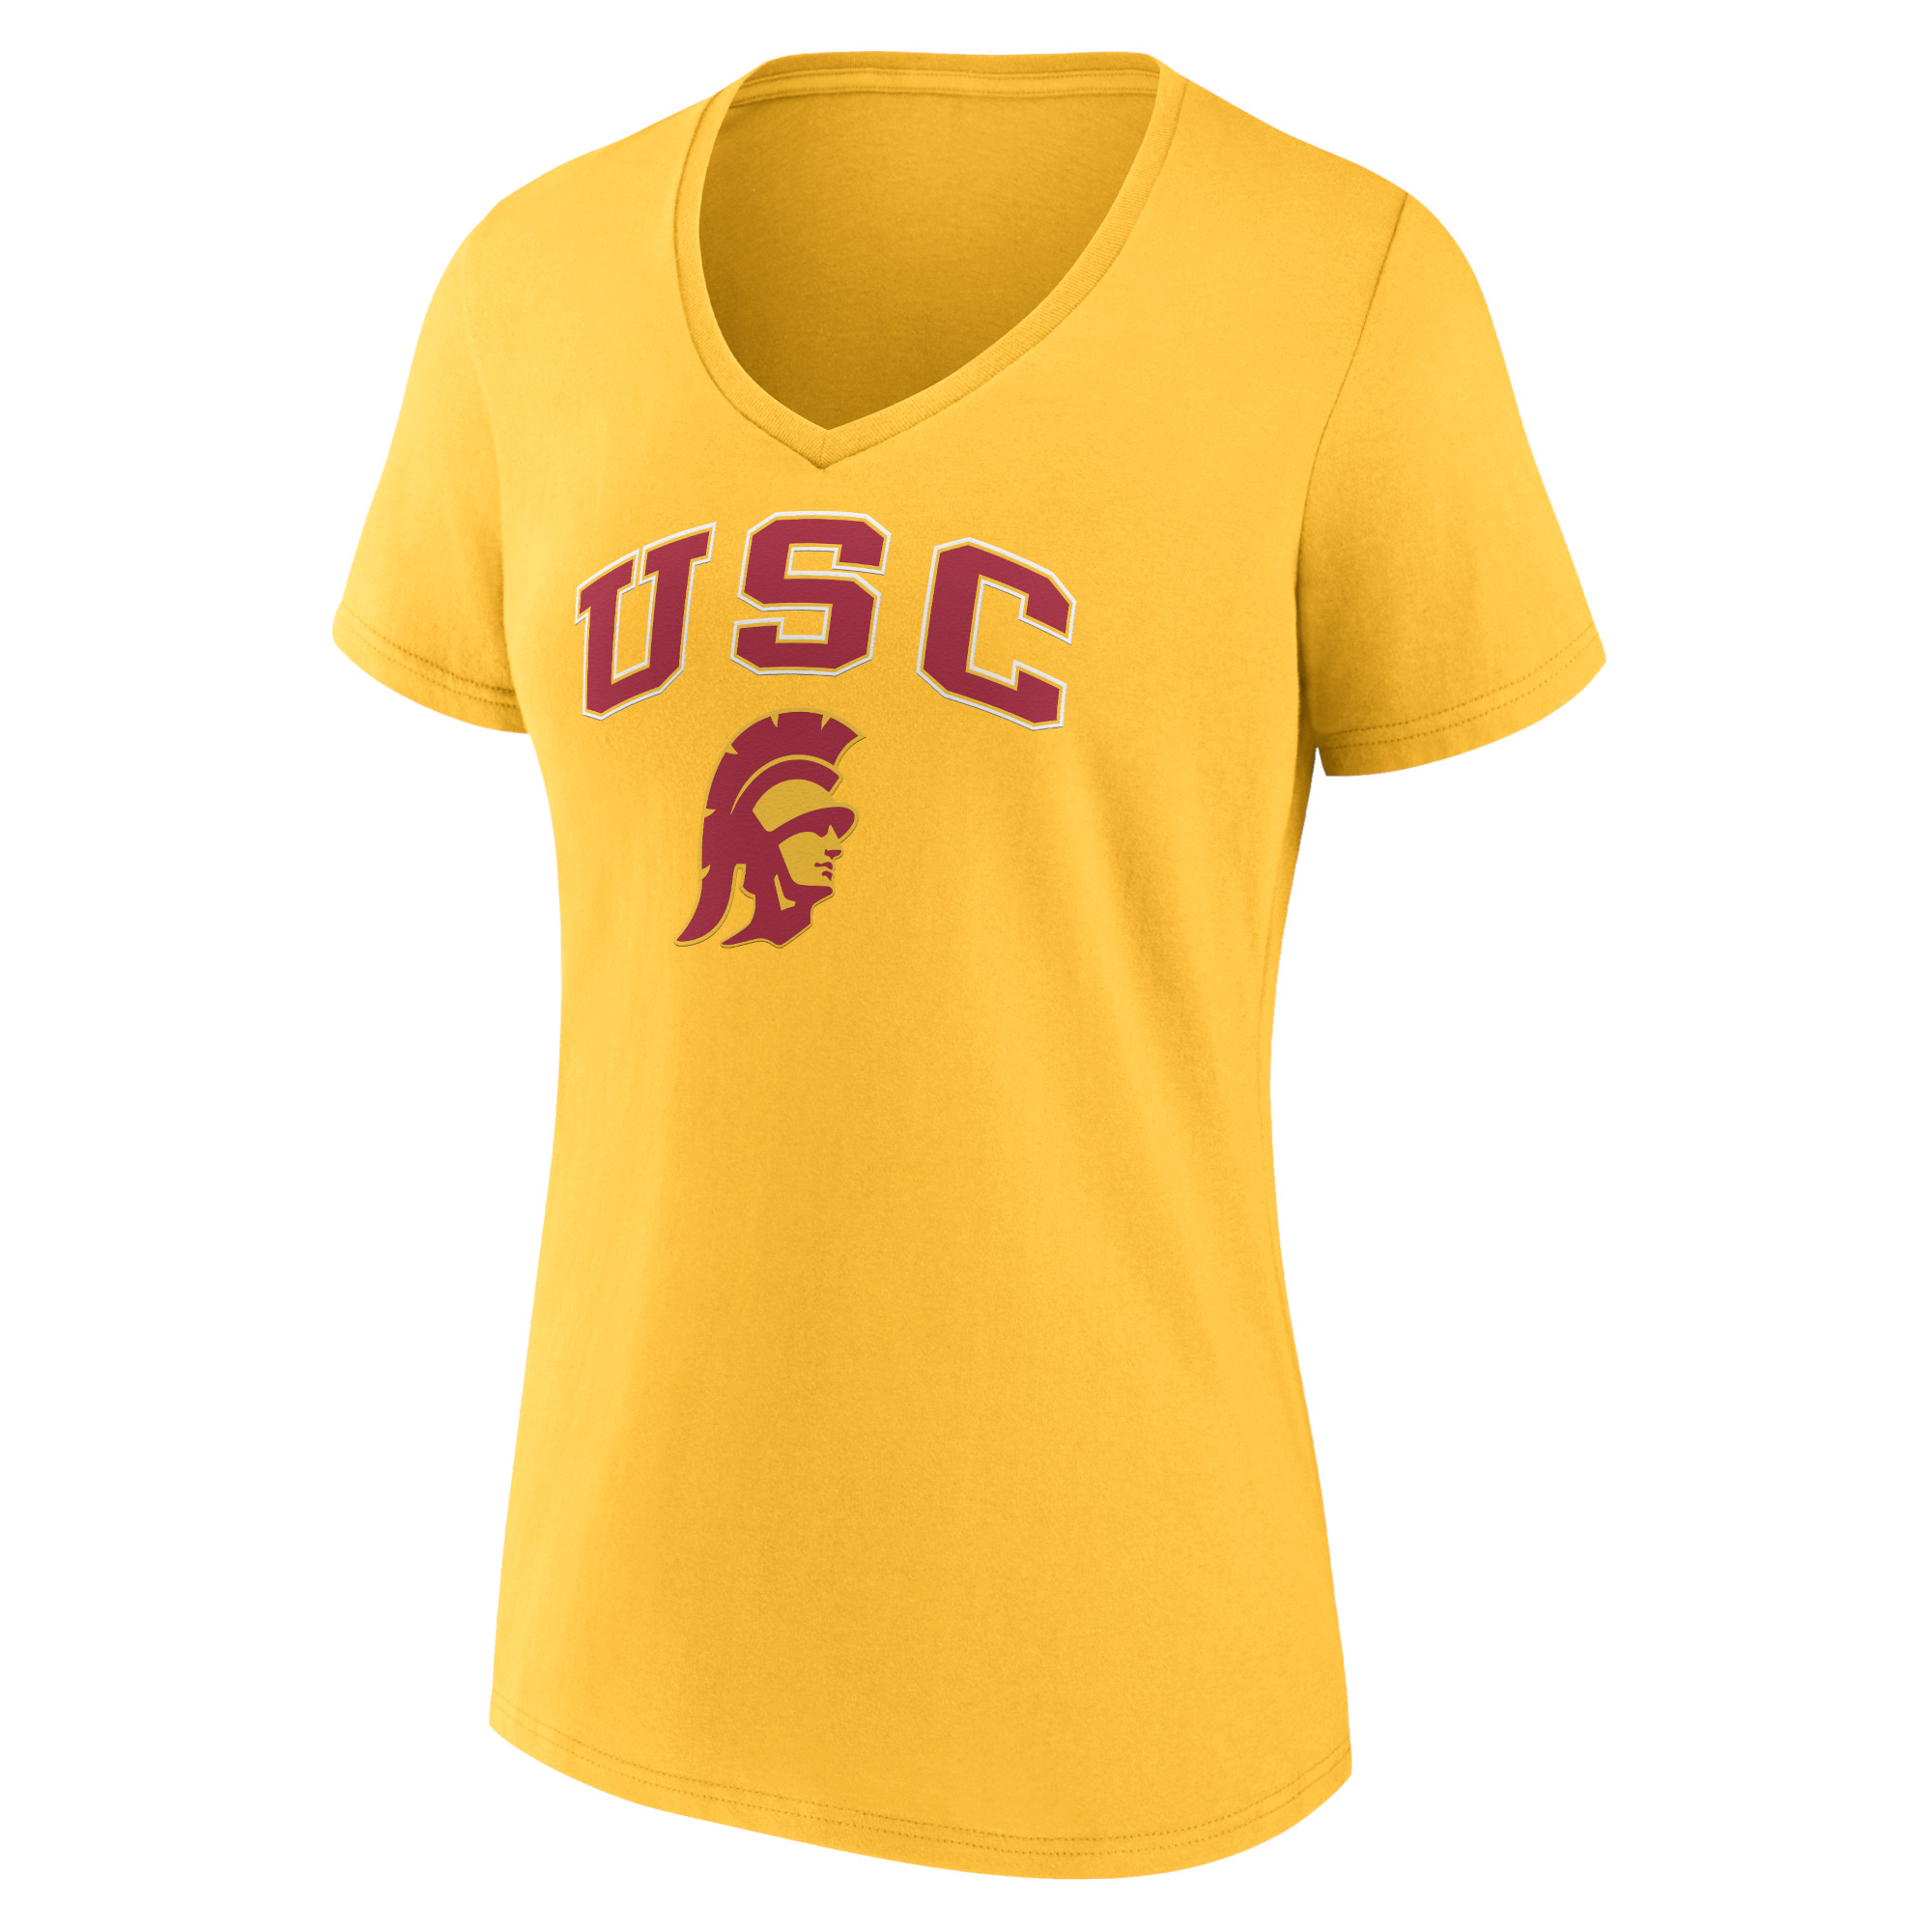 Women's Fanatics Branded Gold USC Trojans Evergreen Campus V-Neck T-Shirt - image 2 of 3